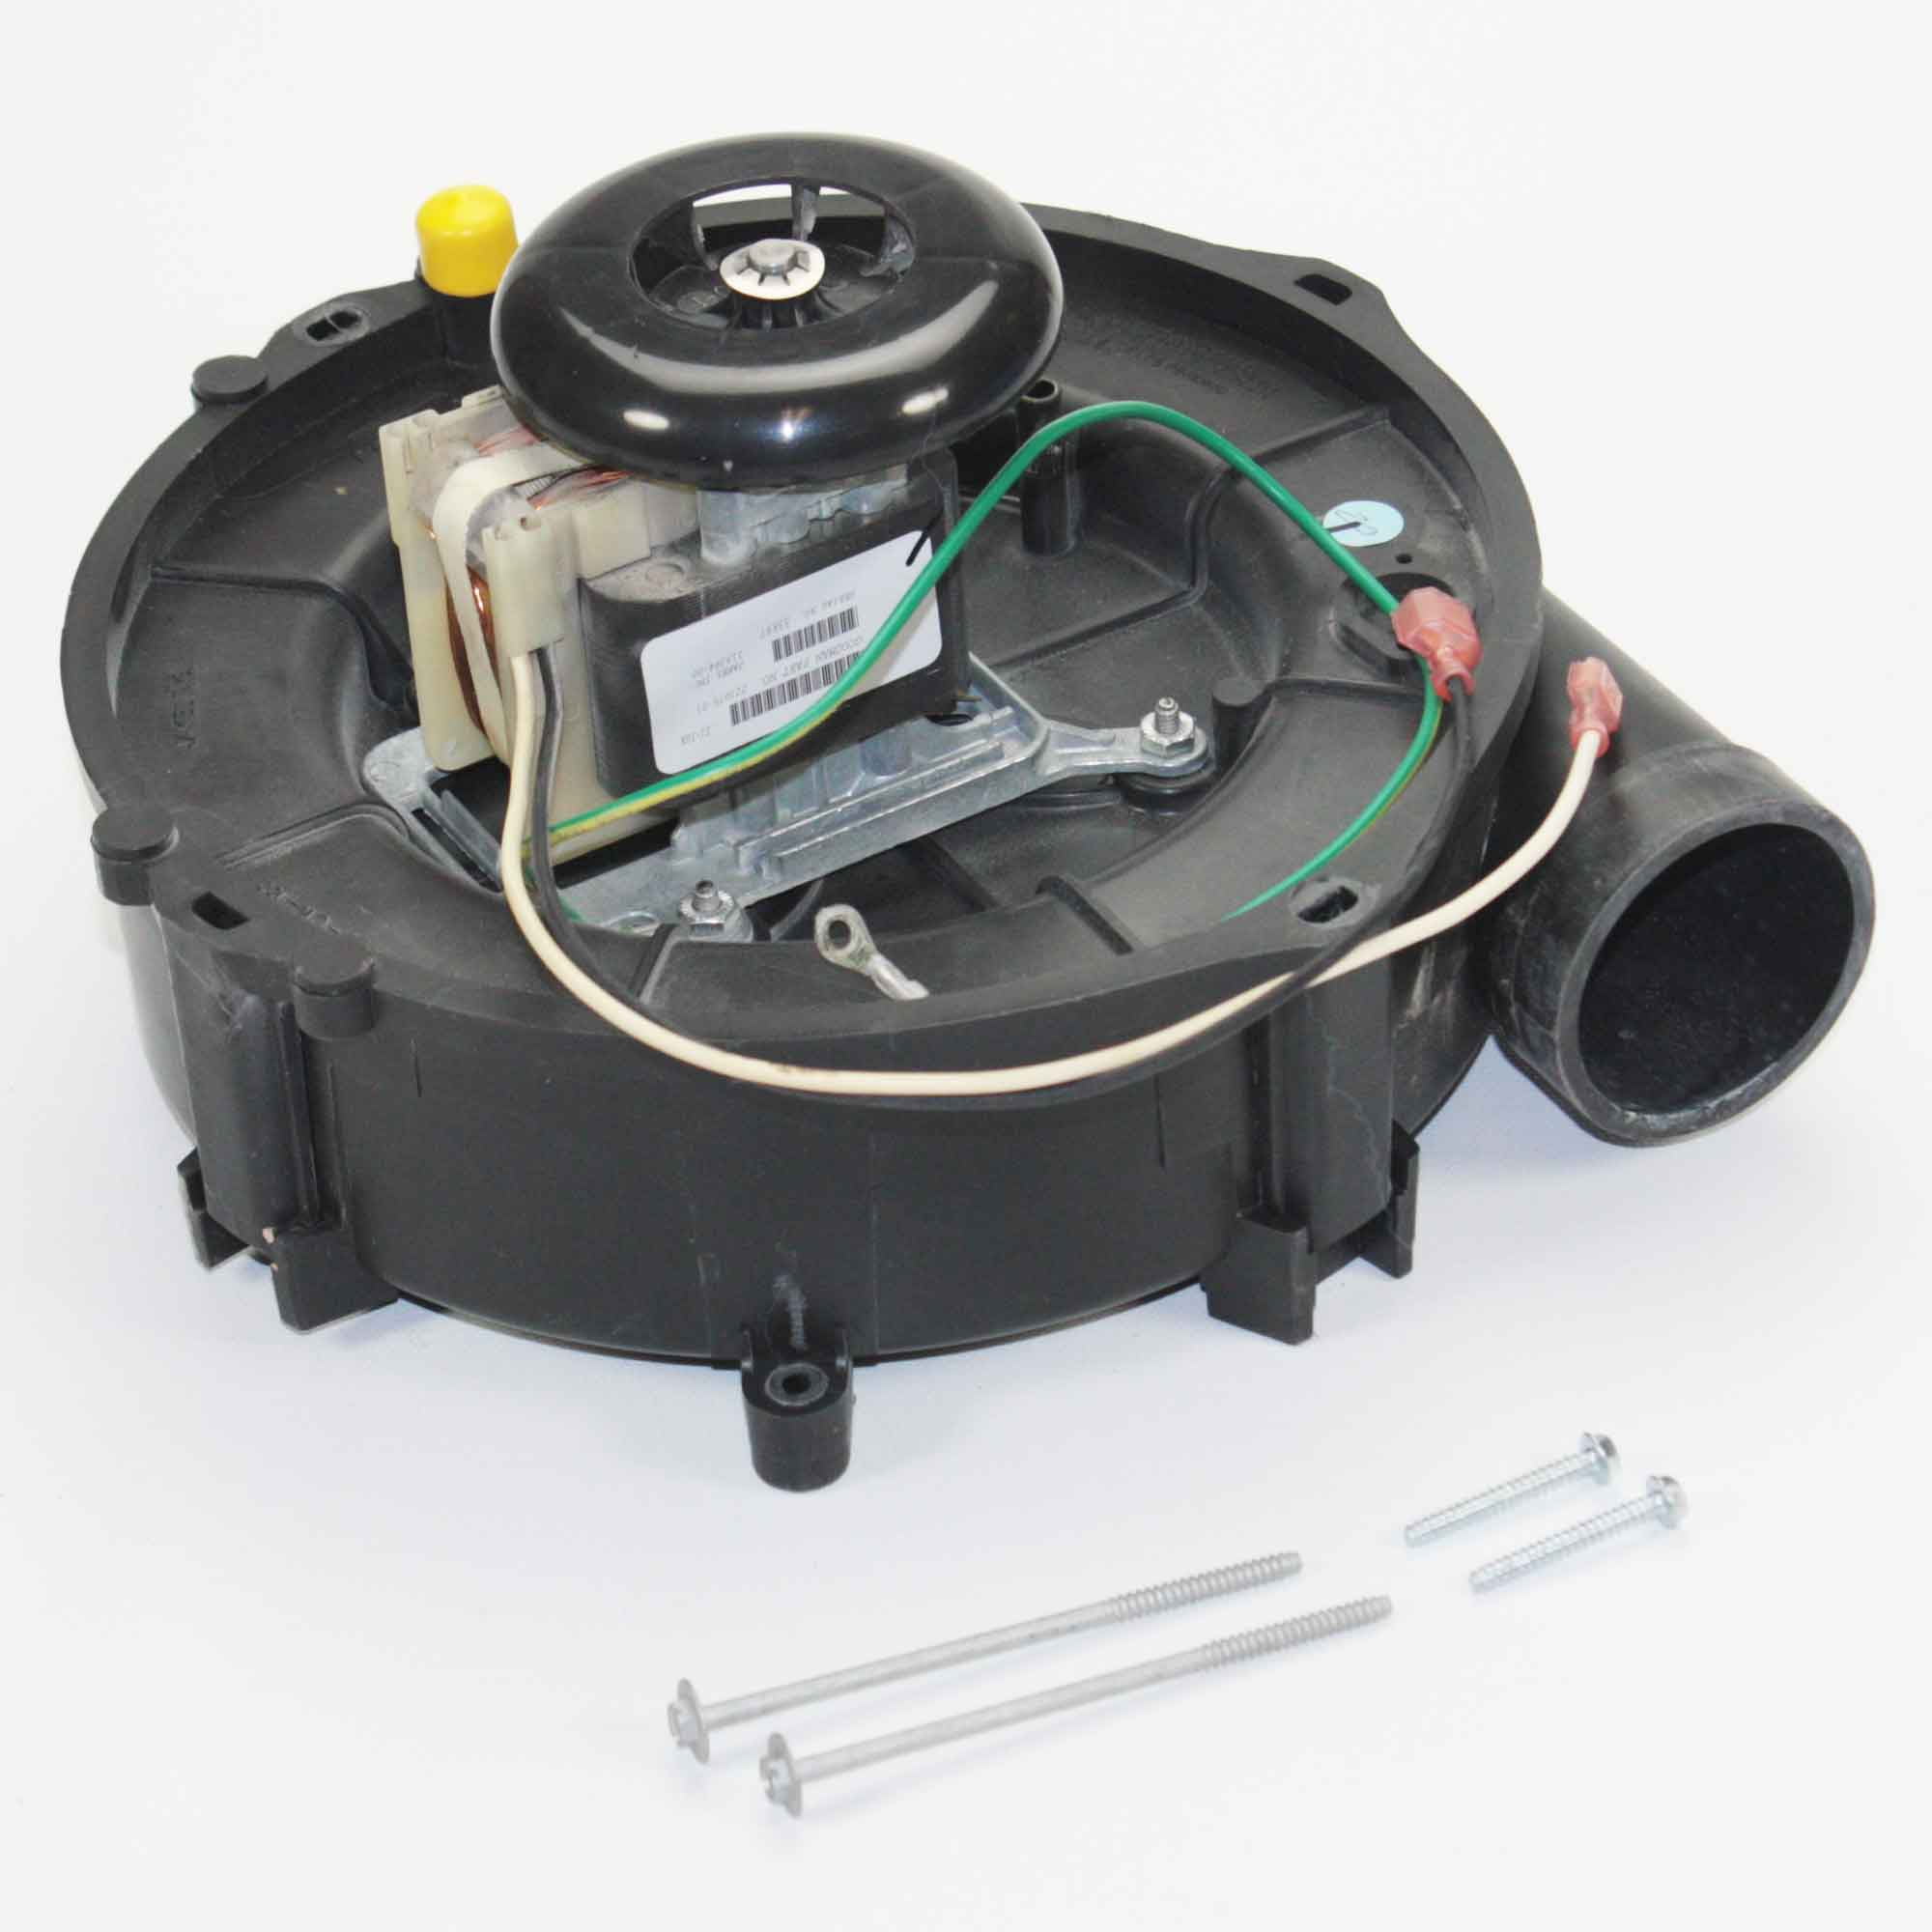 Goodman Furnace Draft Inducer Blower Motor for sale online 0171M00001S 